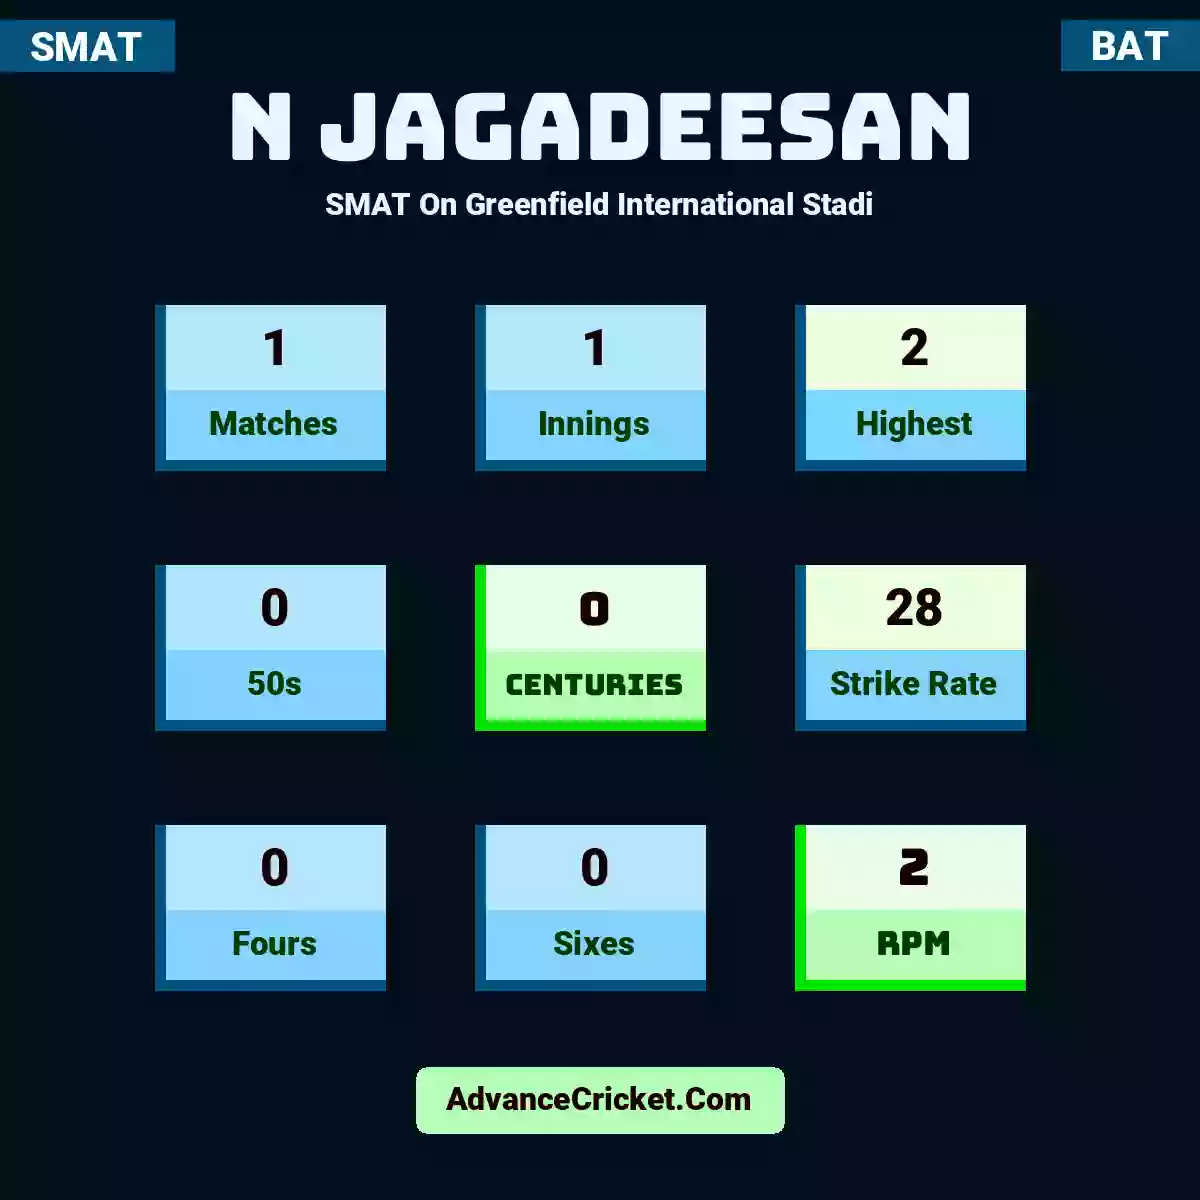 N Jagadeesan SMAT  On Greenfield International Stadi, N Jagadeesan played 1 matches, scored 2 runs as highest, 0 half-centuries, and 0 centuries, with a strike rate of 28. N.Jagadeesan hit 0 fours and 0 sixes, with an RPM of 2.